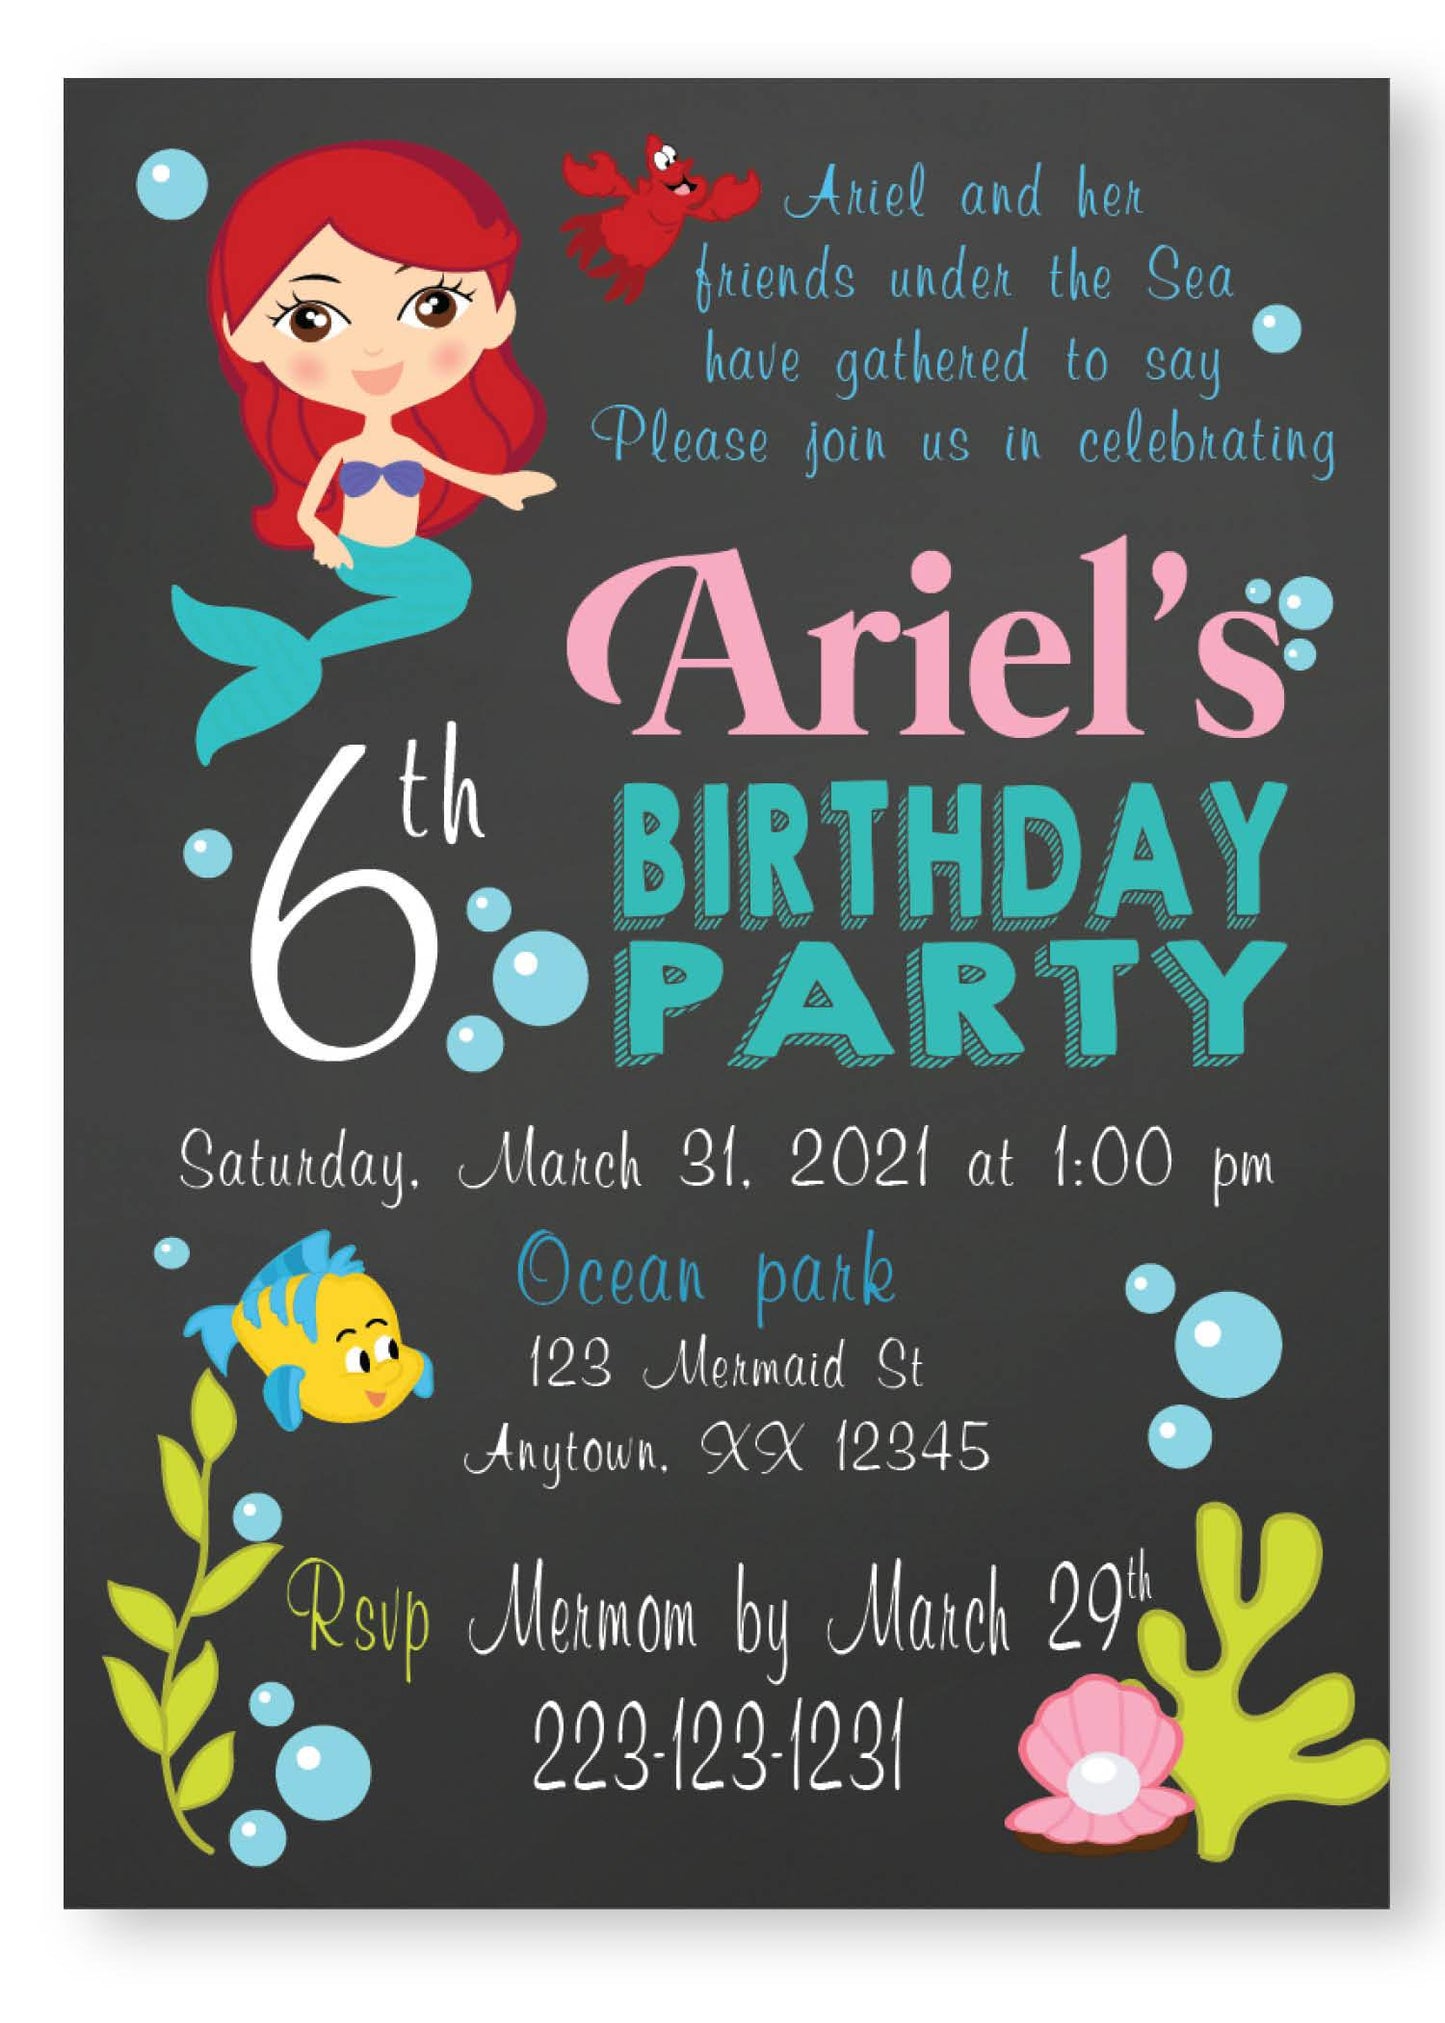 Little Meramid chalk birthday personalized invitation, little mermaid invitation, personalized invitation